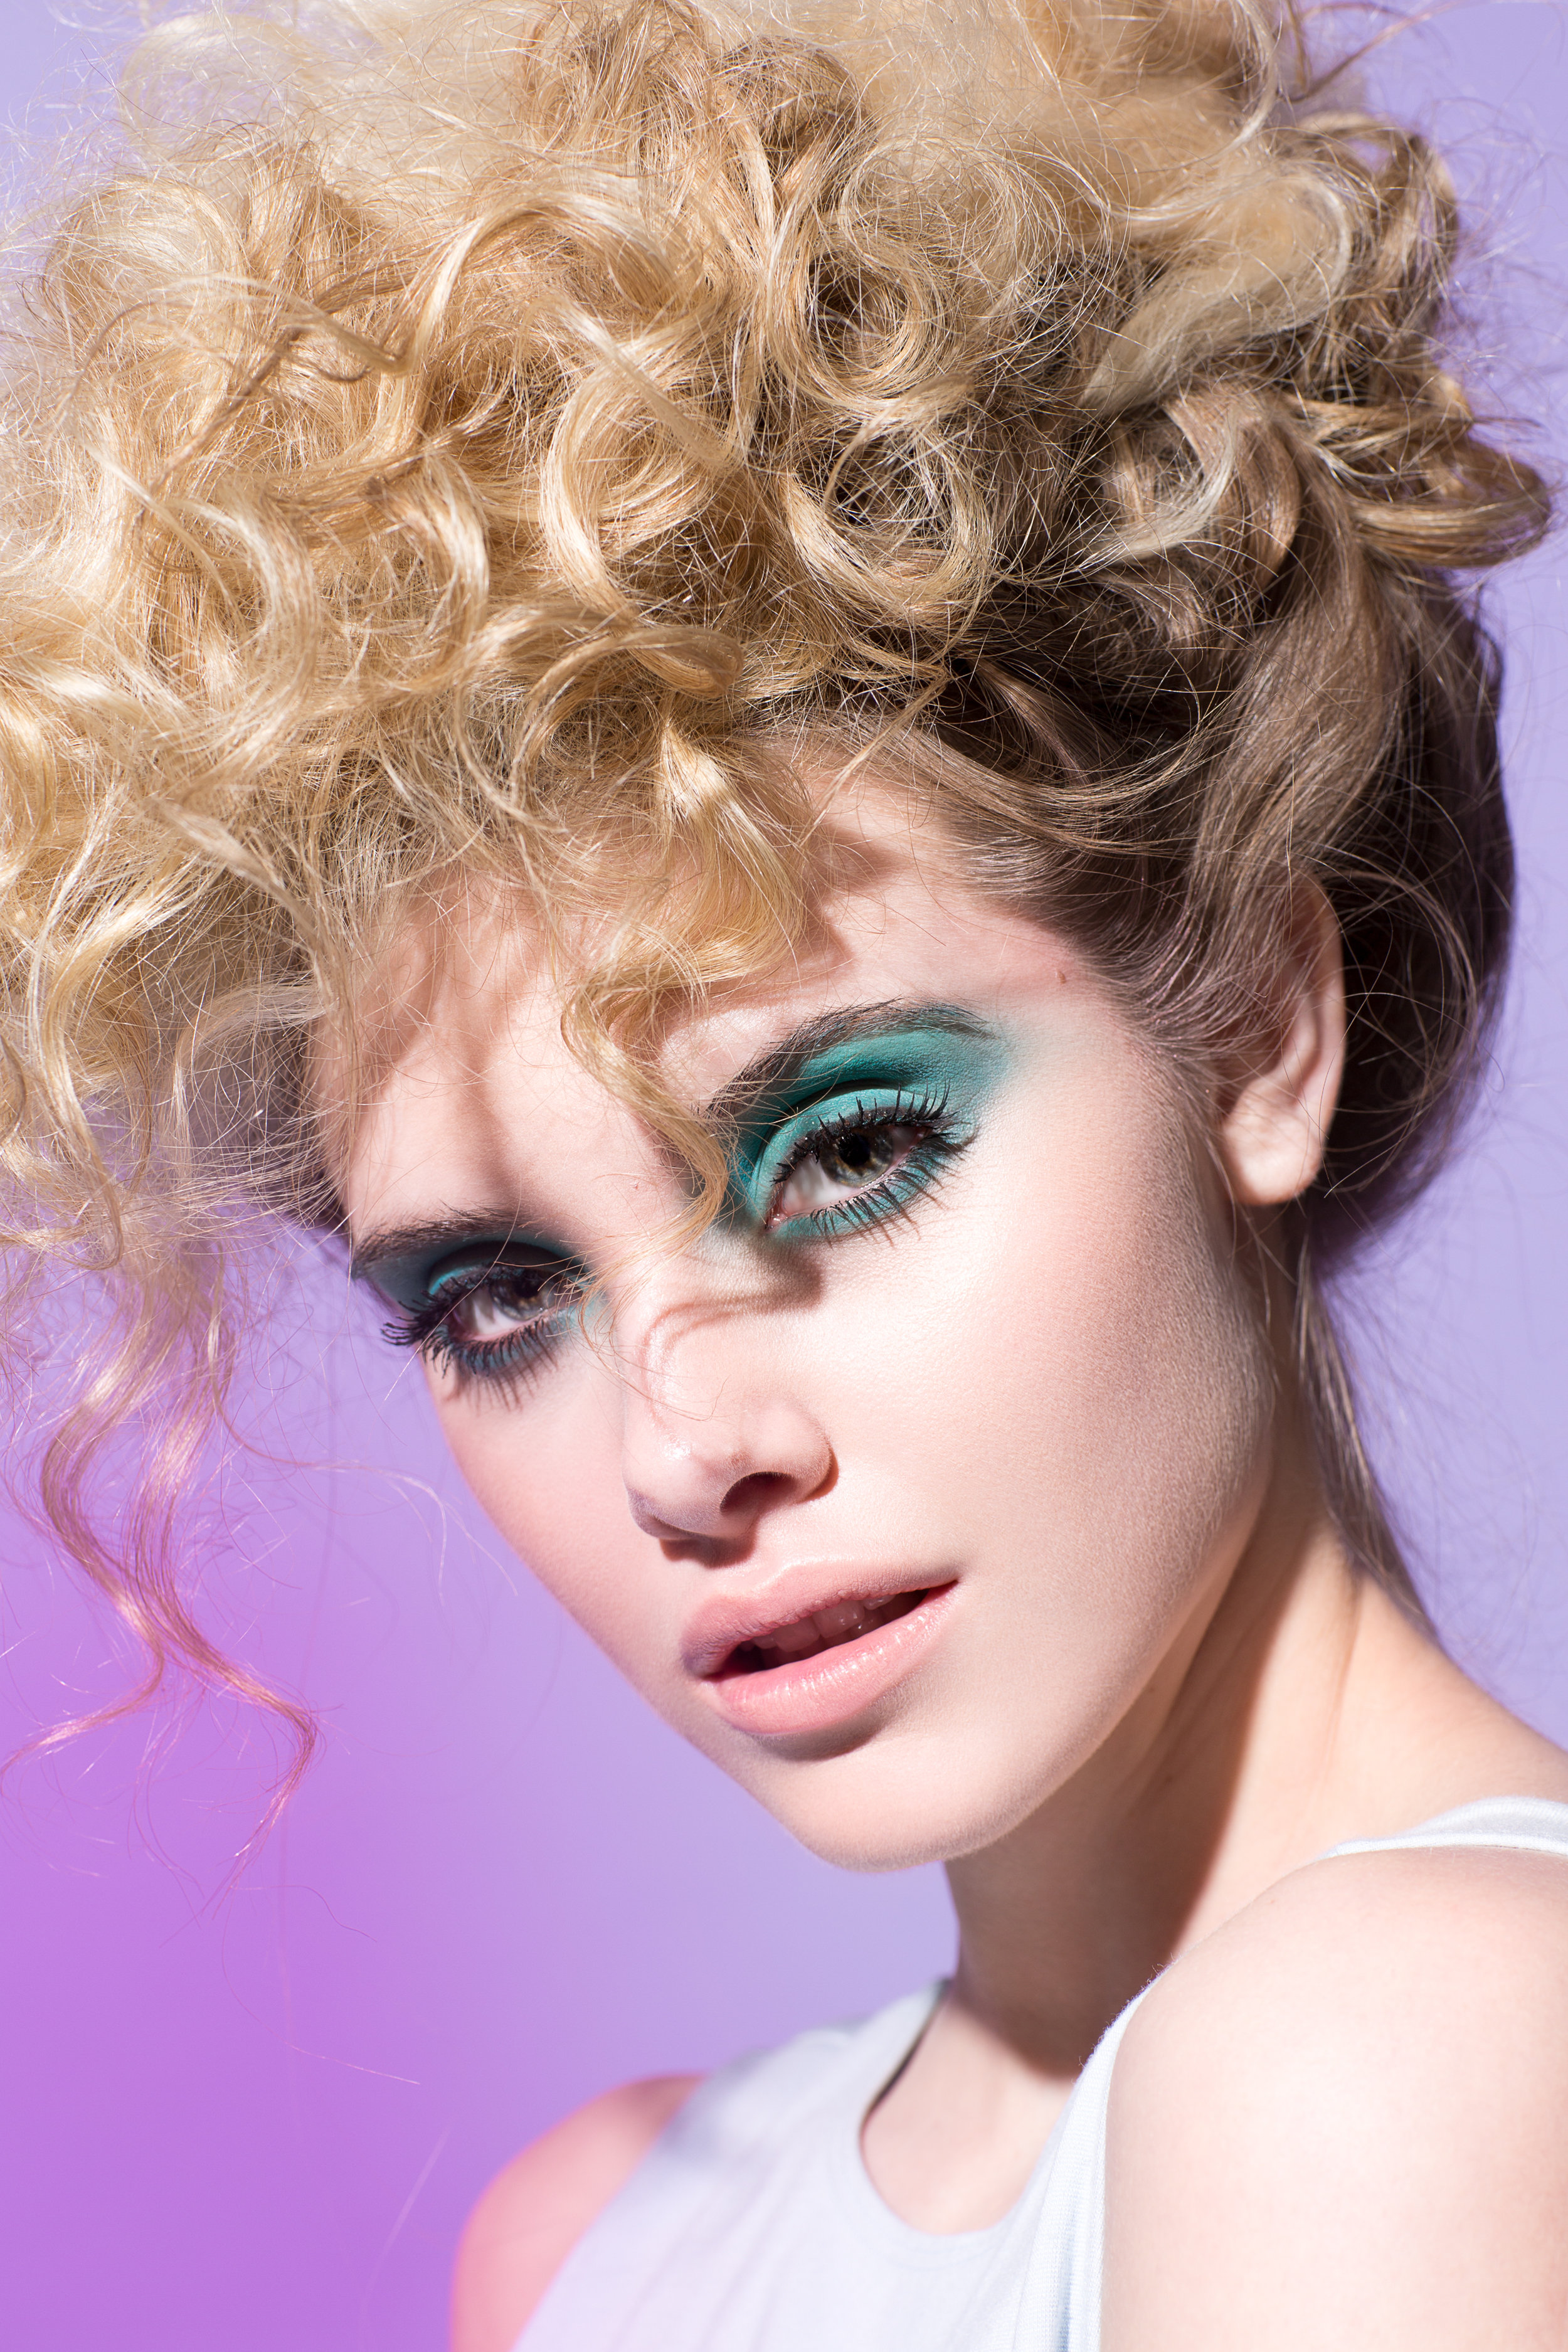  MODEL | Hannah Audette AGENCY | Edge Agency MUA | Lisa Hallam Makeup Artistry HAIR | Mel Corkum HOTOGRAPHY + RETOUCH | Nicole Romanoff 